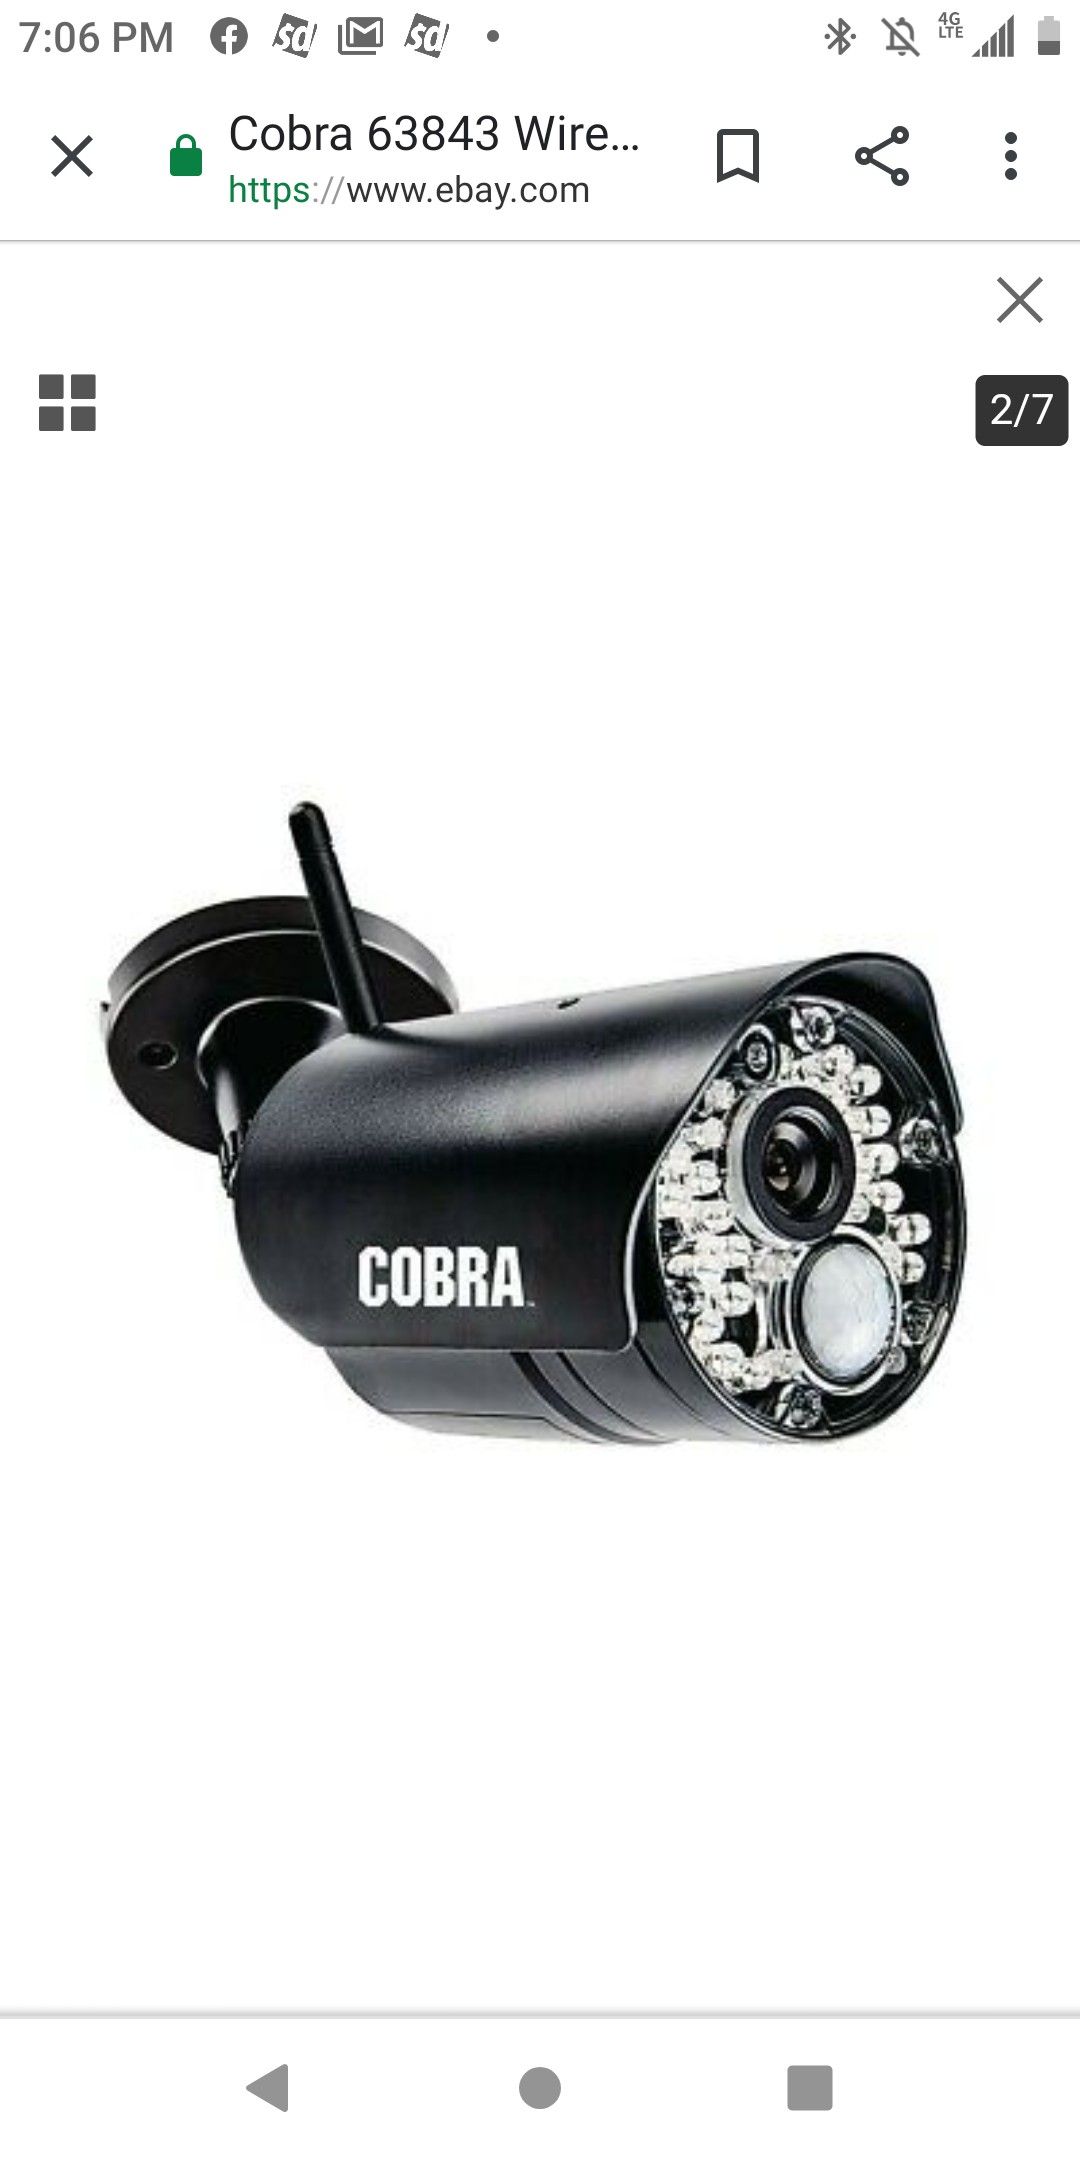 Cobra Wireless Security Camera